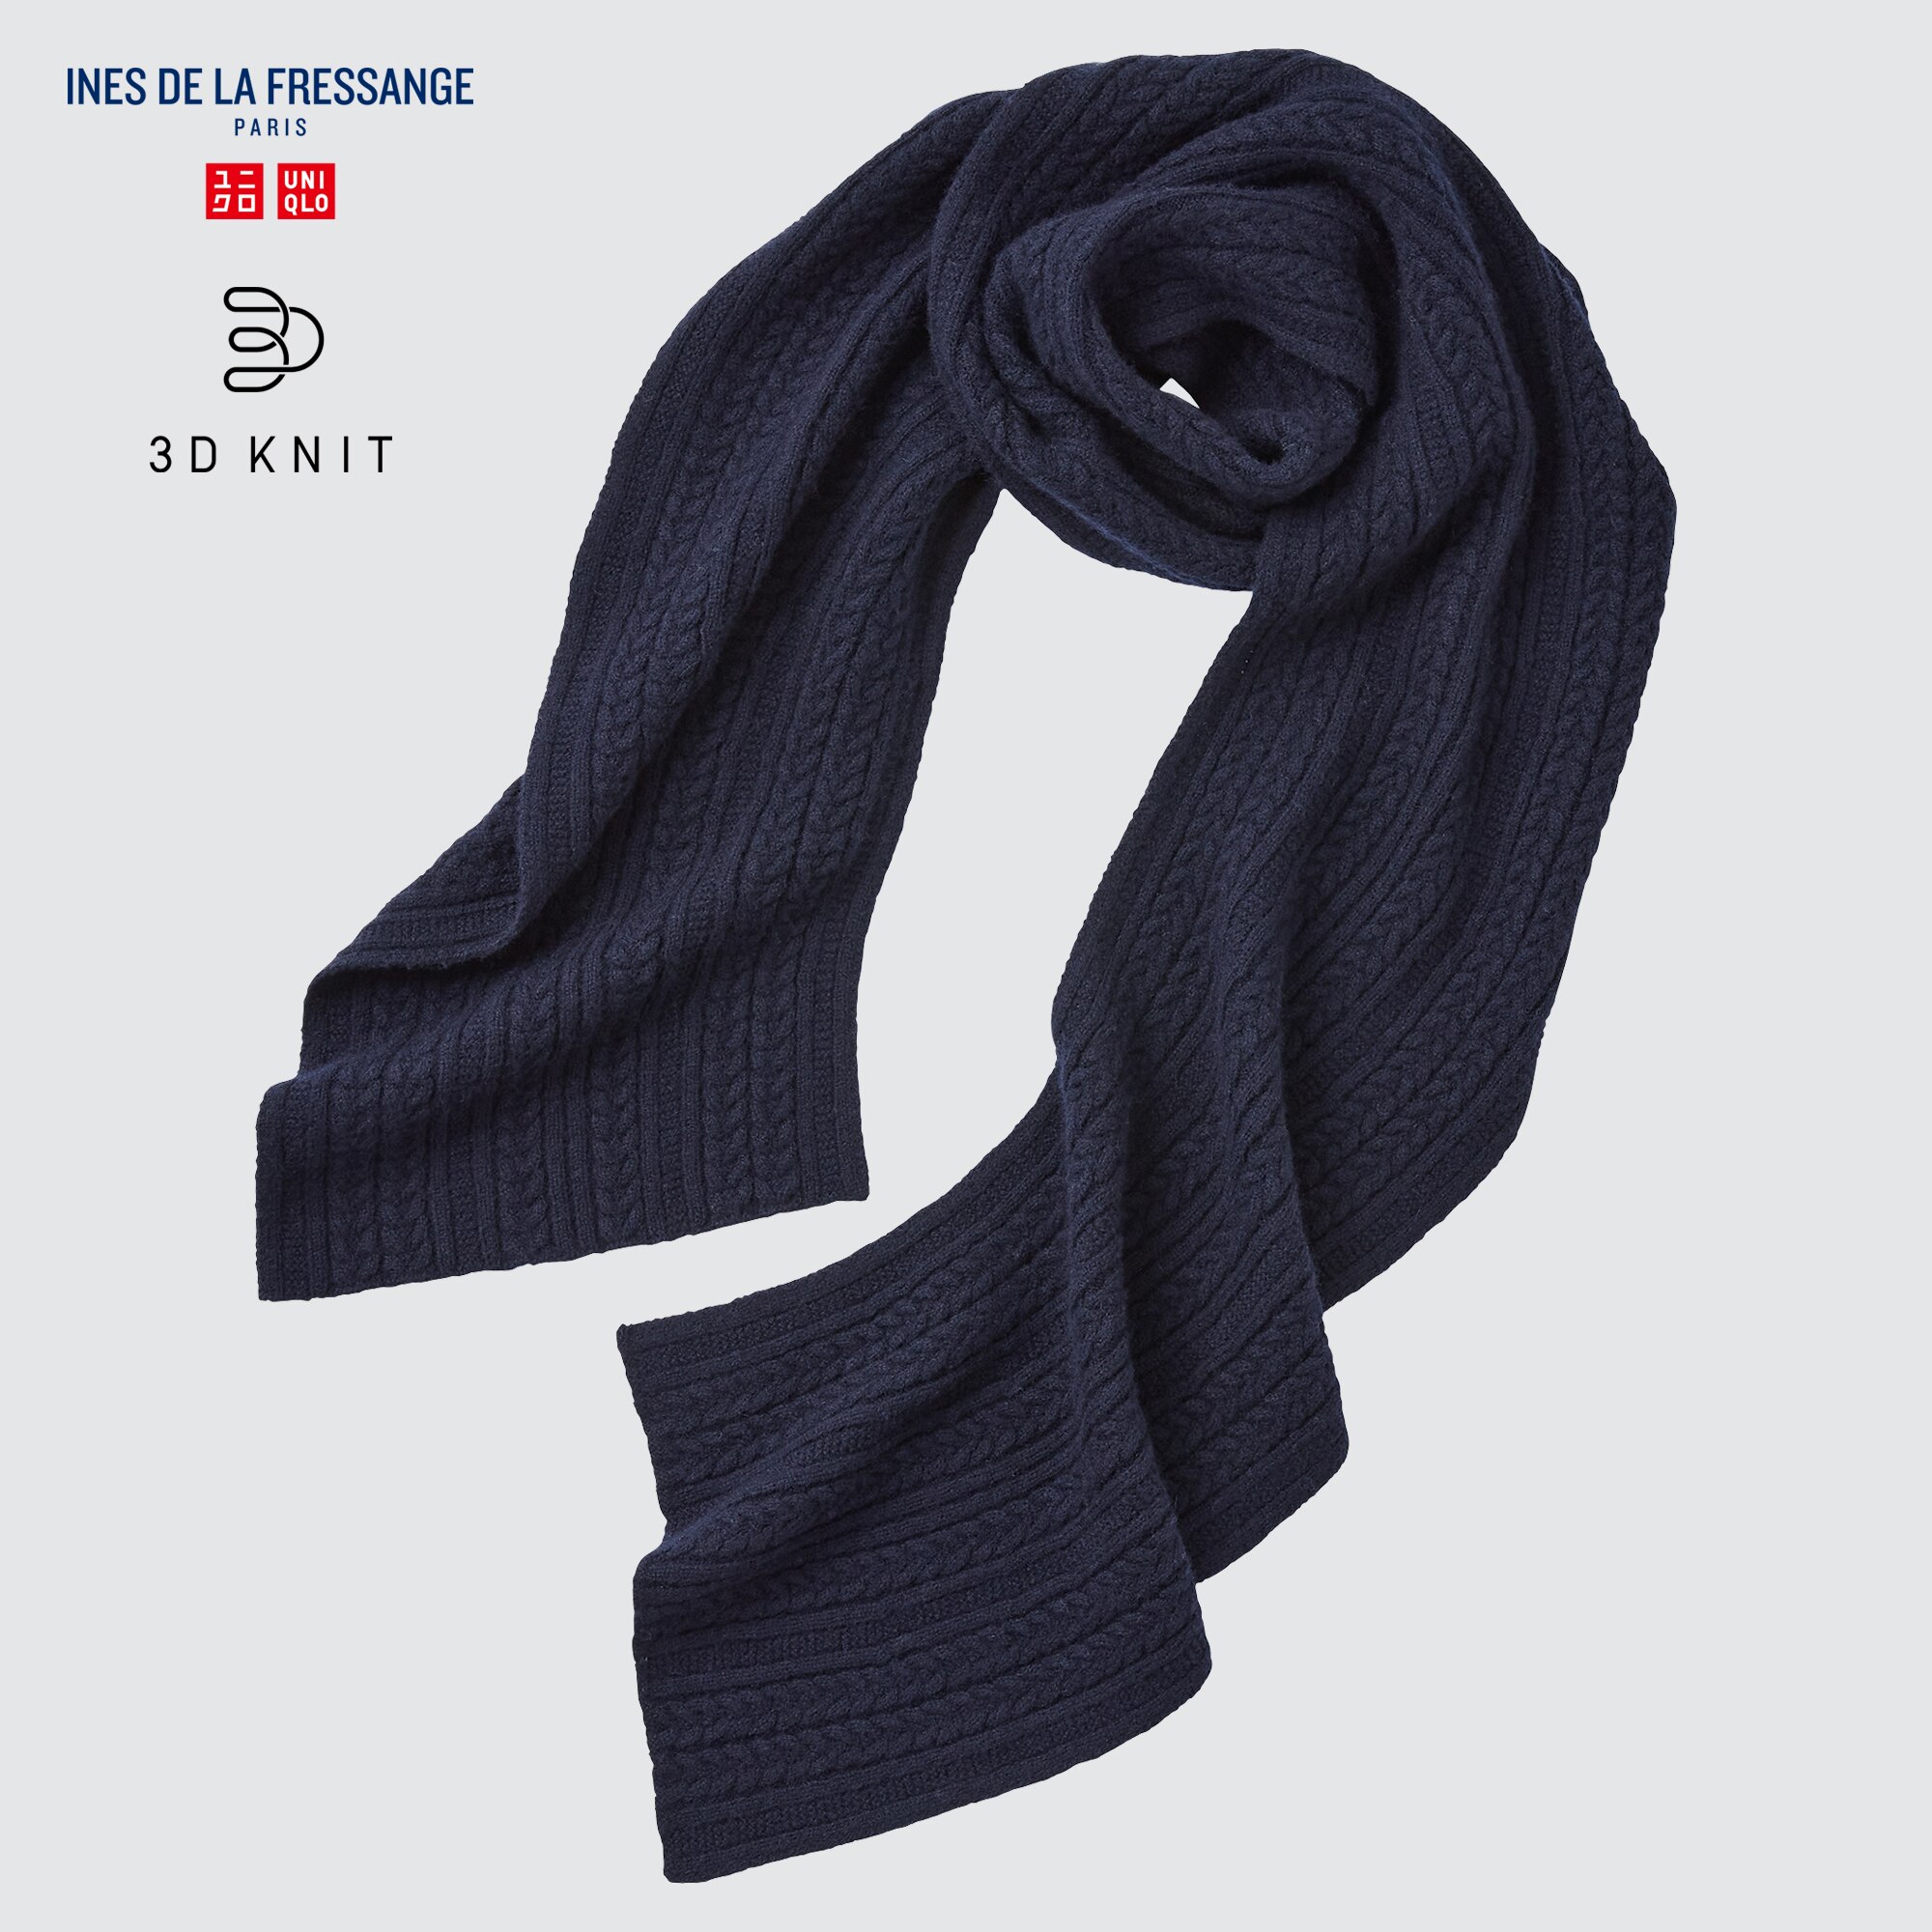 UNIQLO 3D Knit Scarf (Ines de la Fressange) | StyleHint